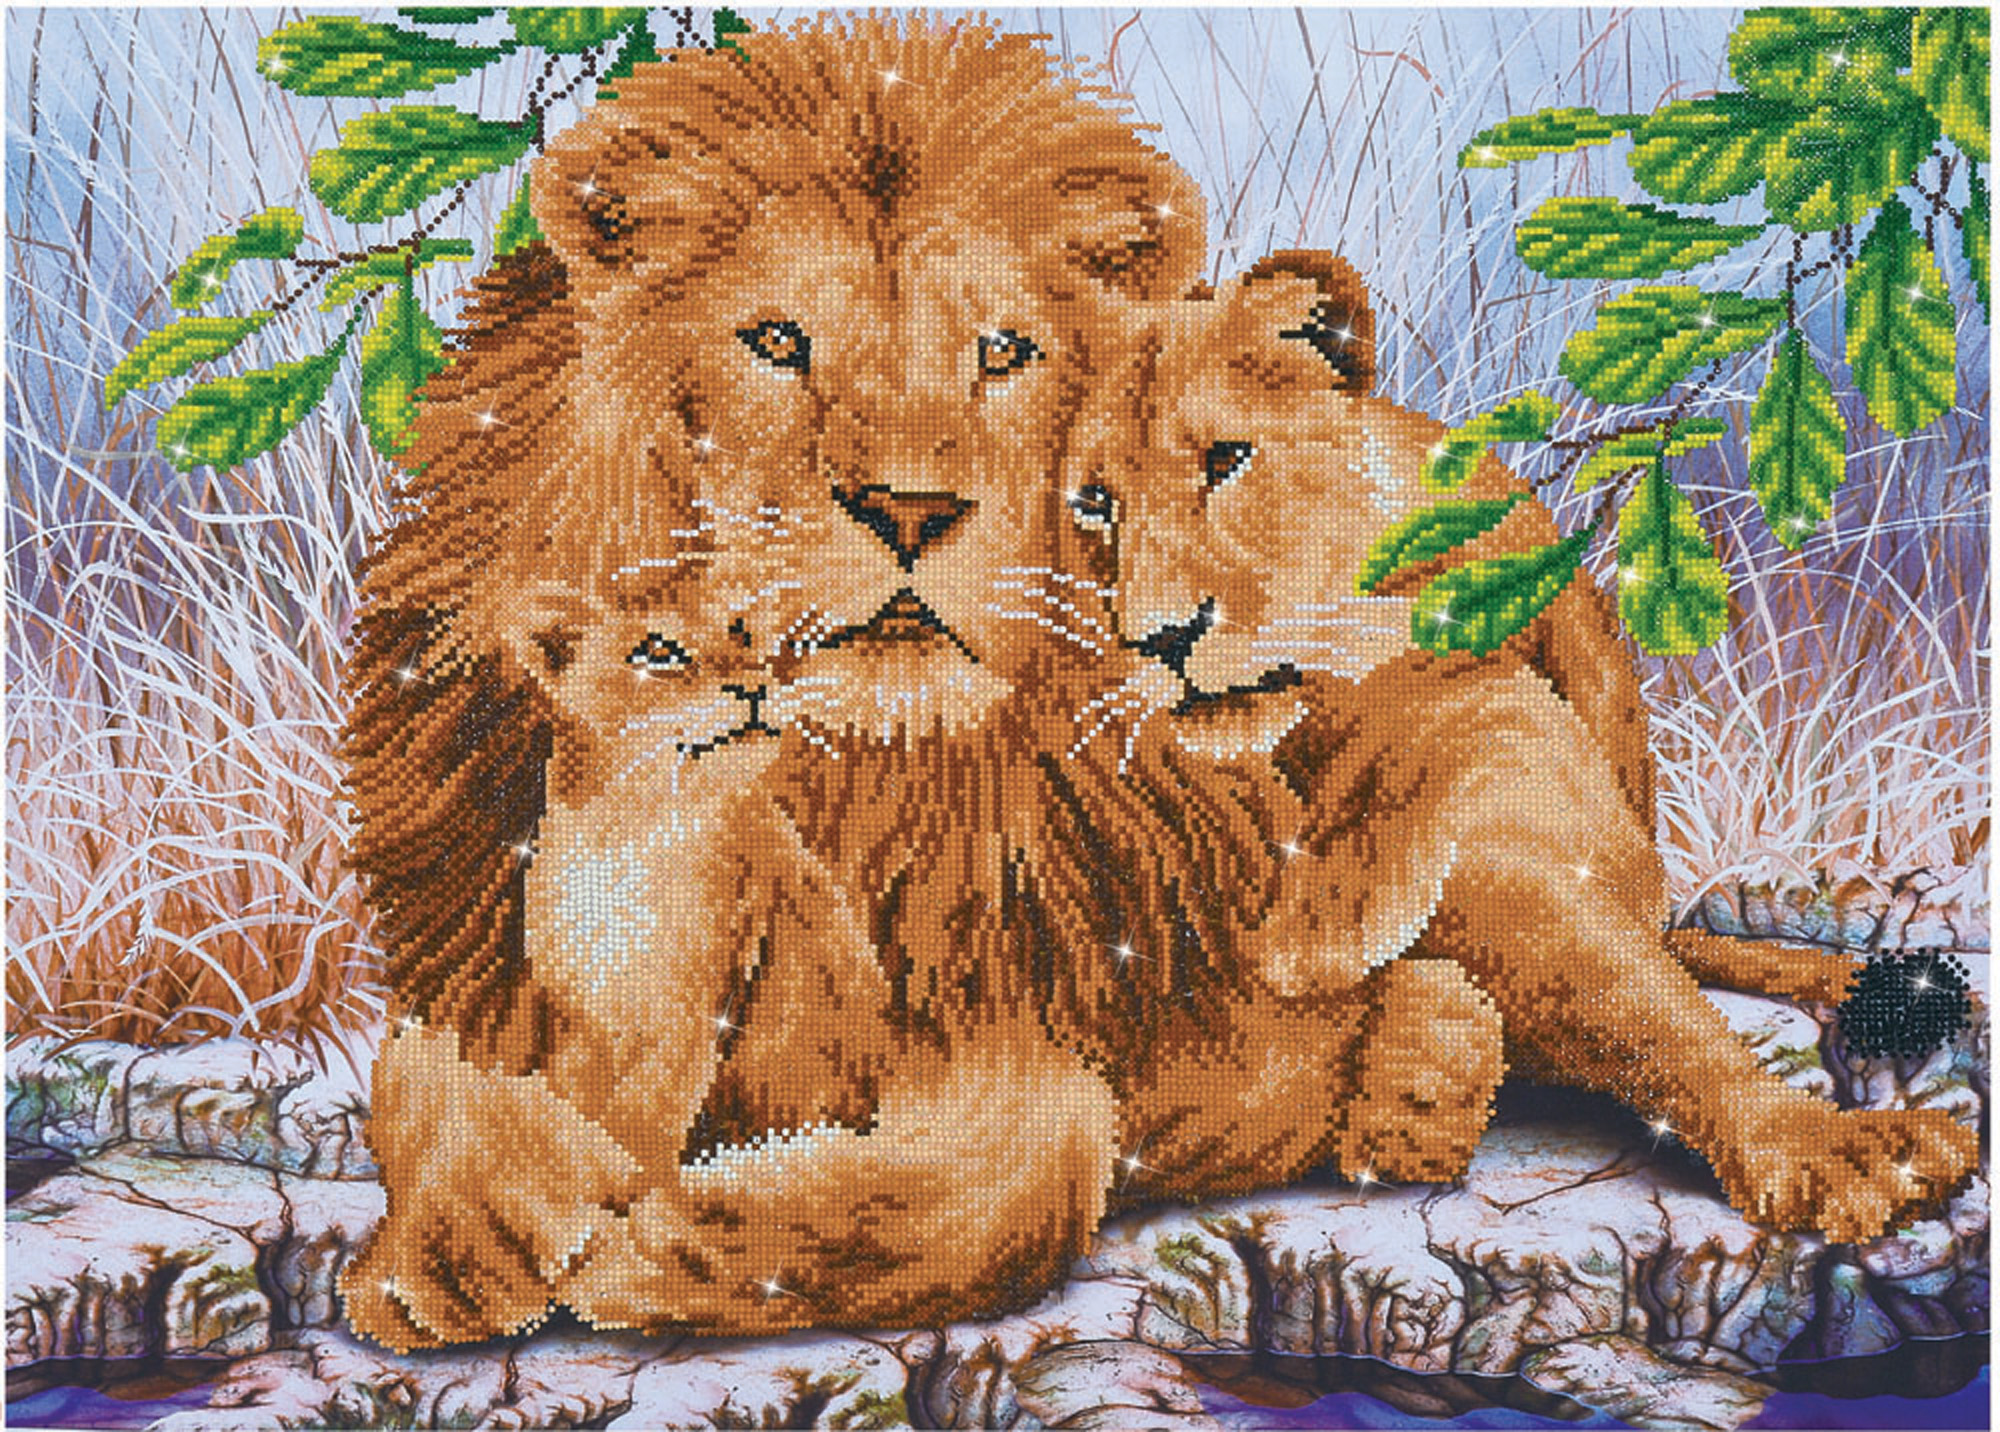  Diamond Painting Animals Lions Diamond Art Kits